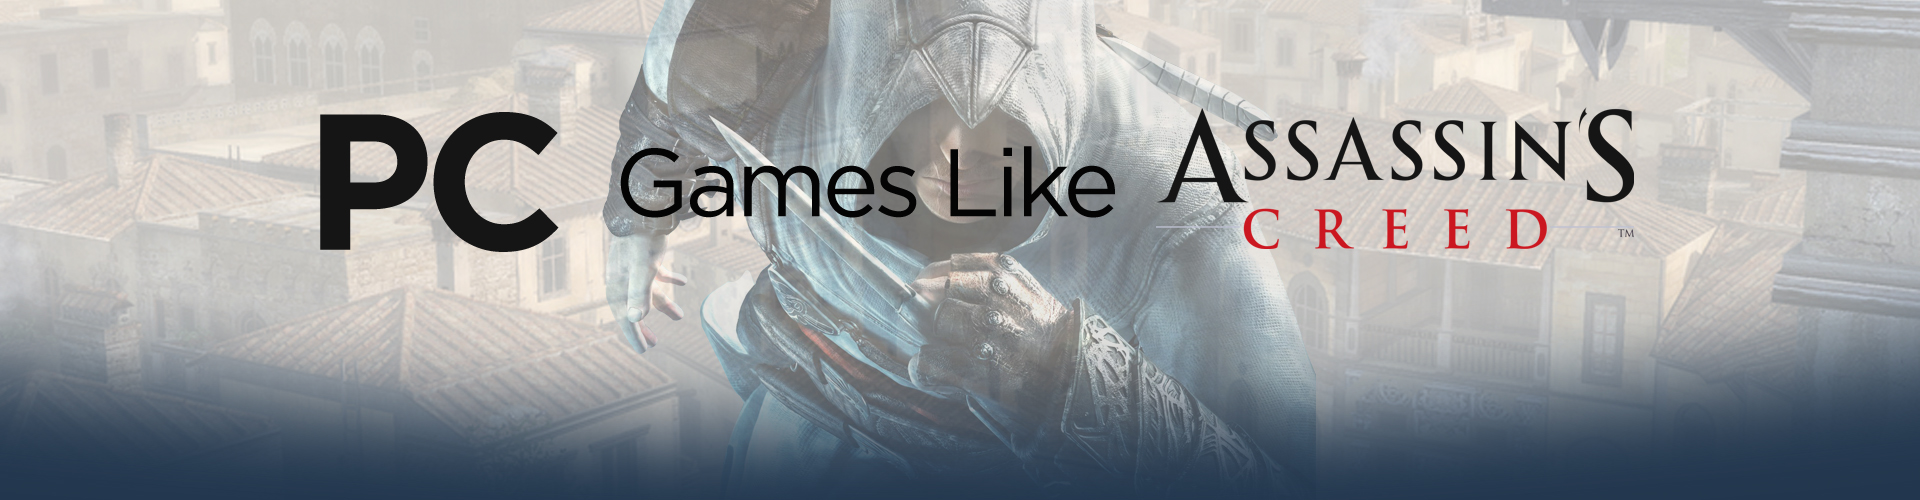 Juegos para PC como Assassin's Creed